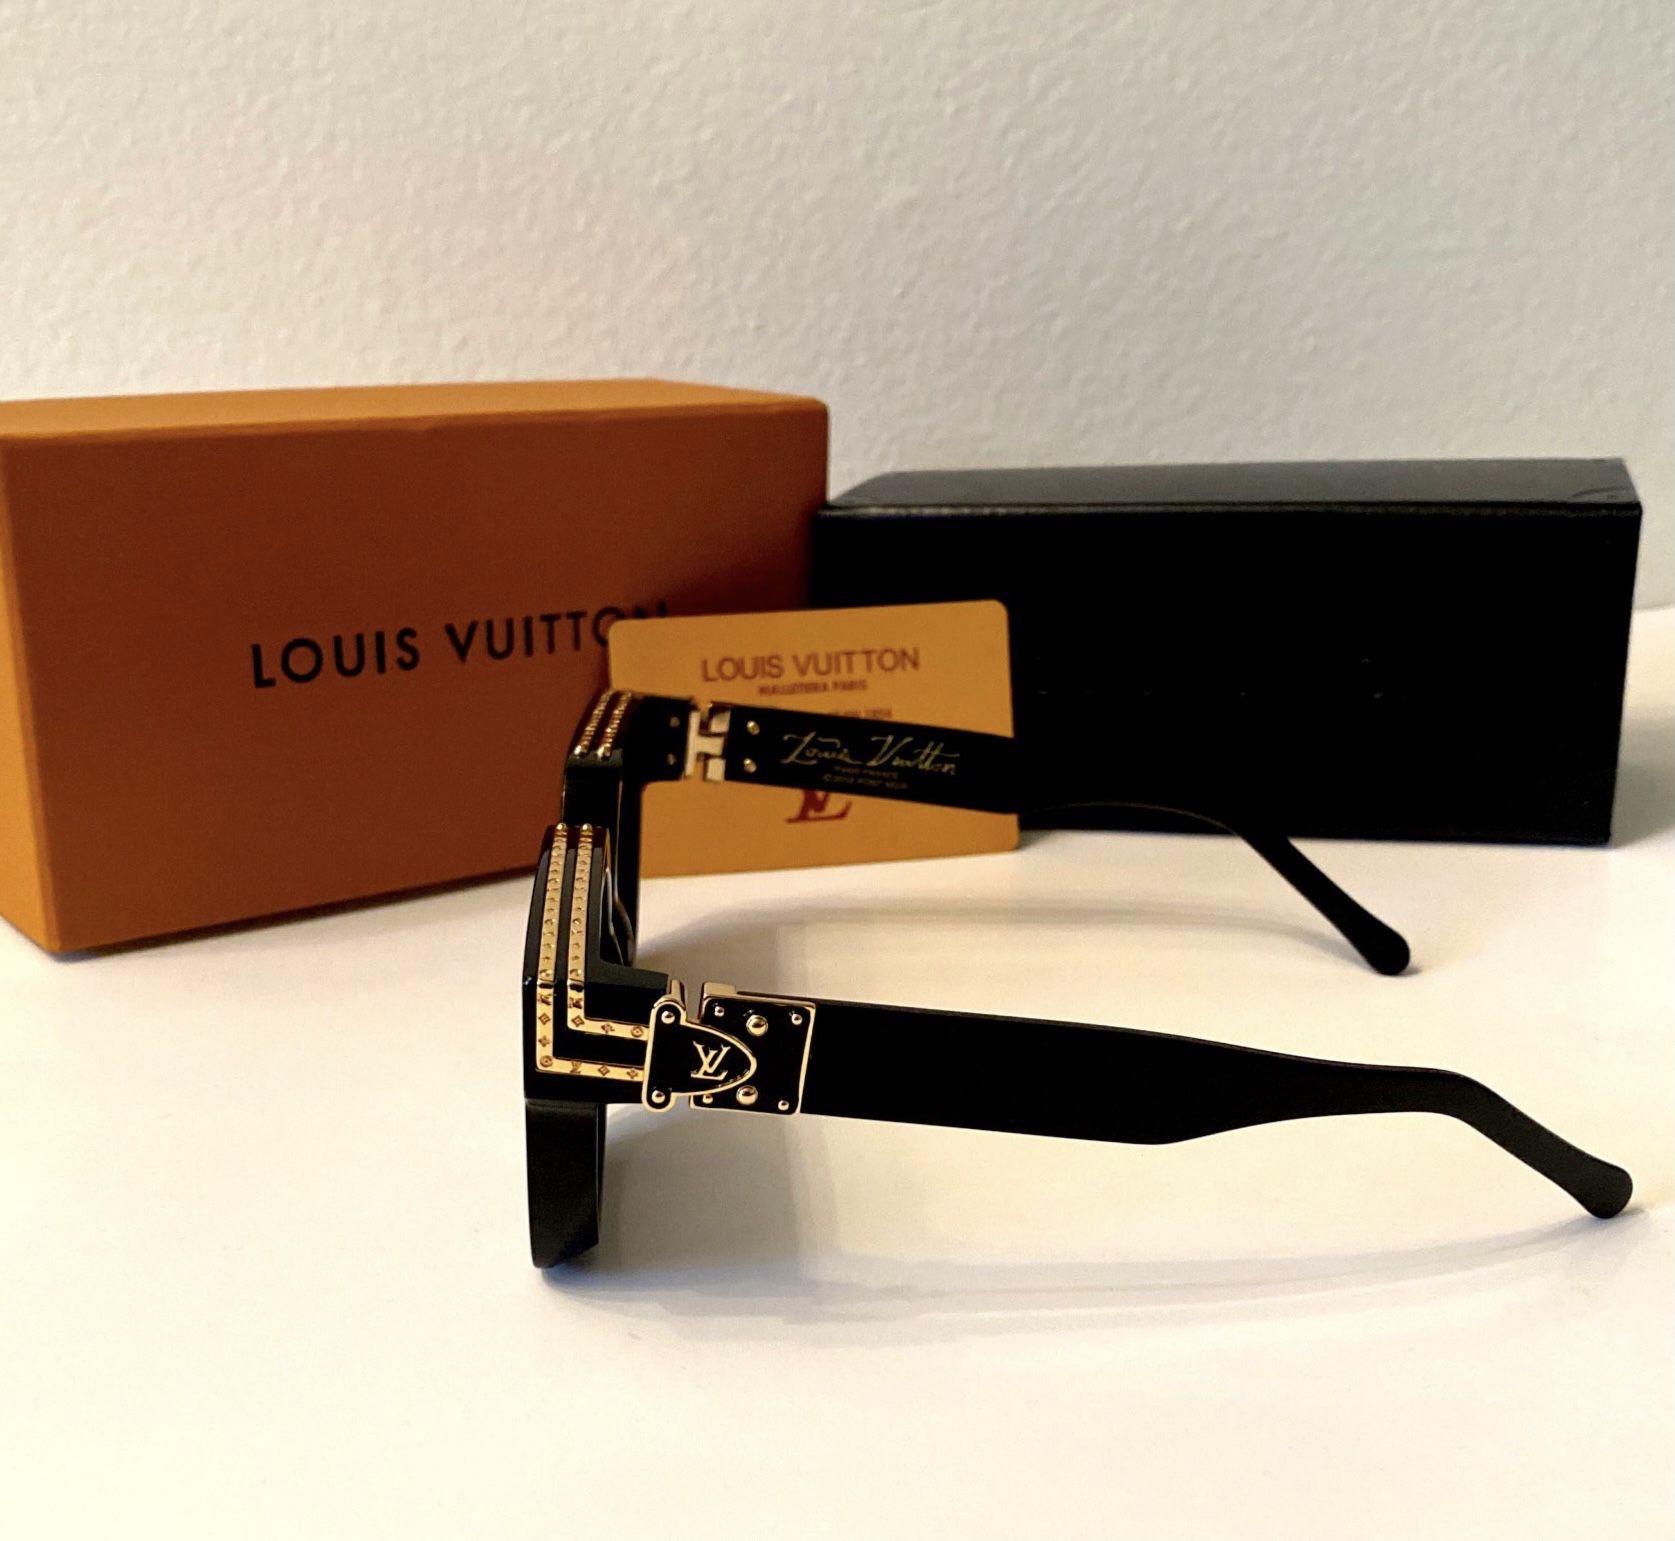 Louis Vuitton Cyclone Sunglasses for Sale in Clovis, CA - OfferUp